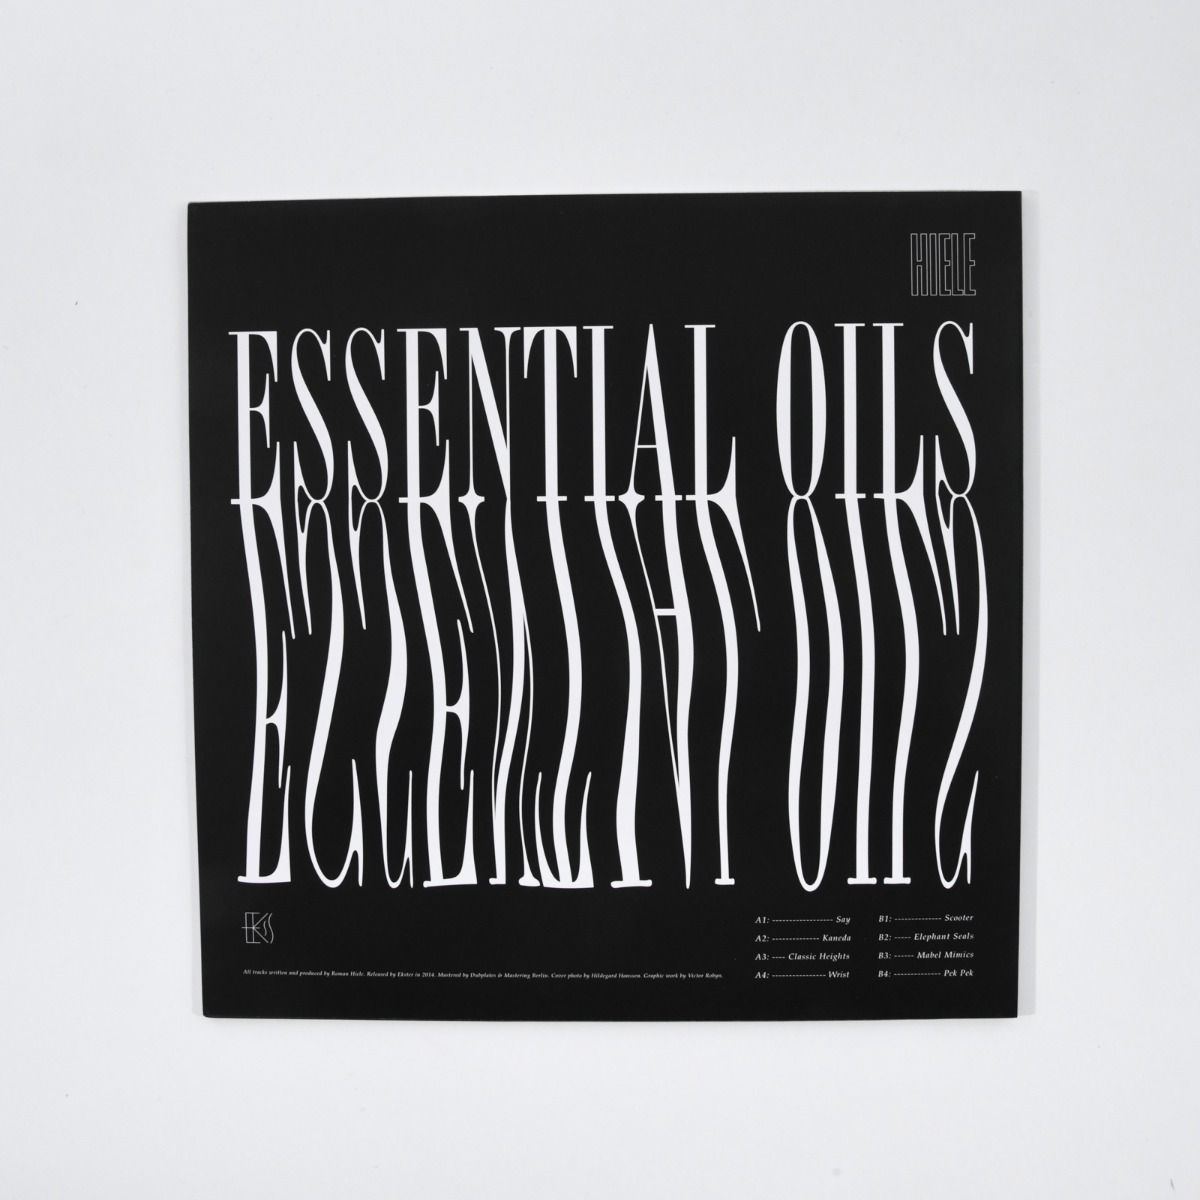 Hiele – Essential Oils 12" LP